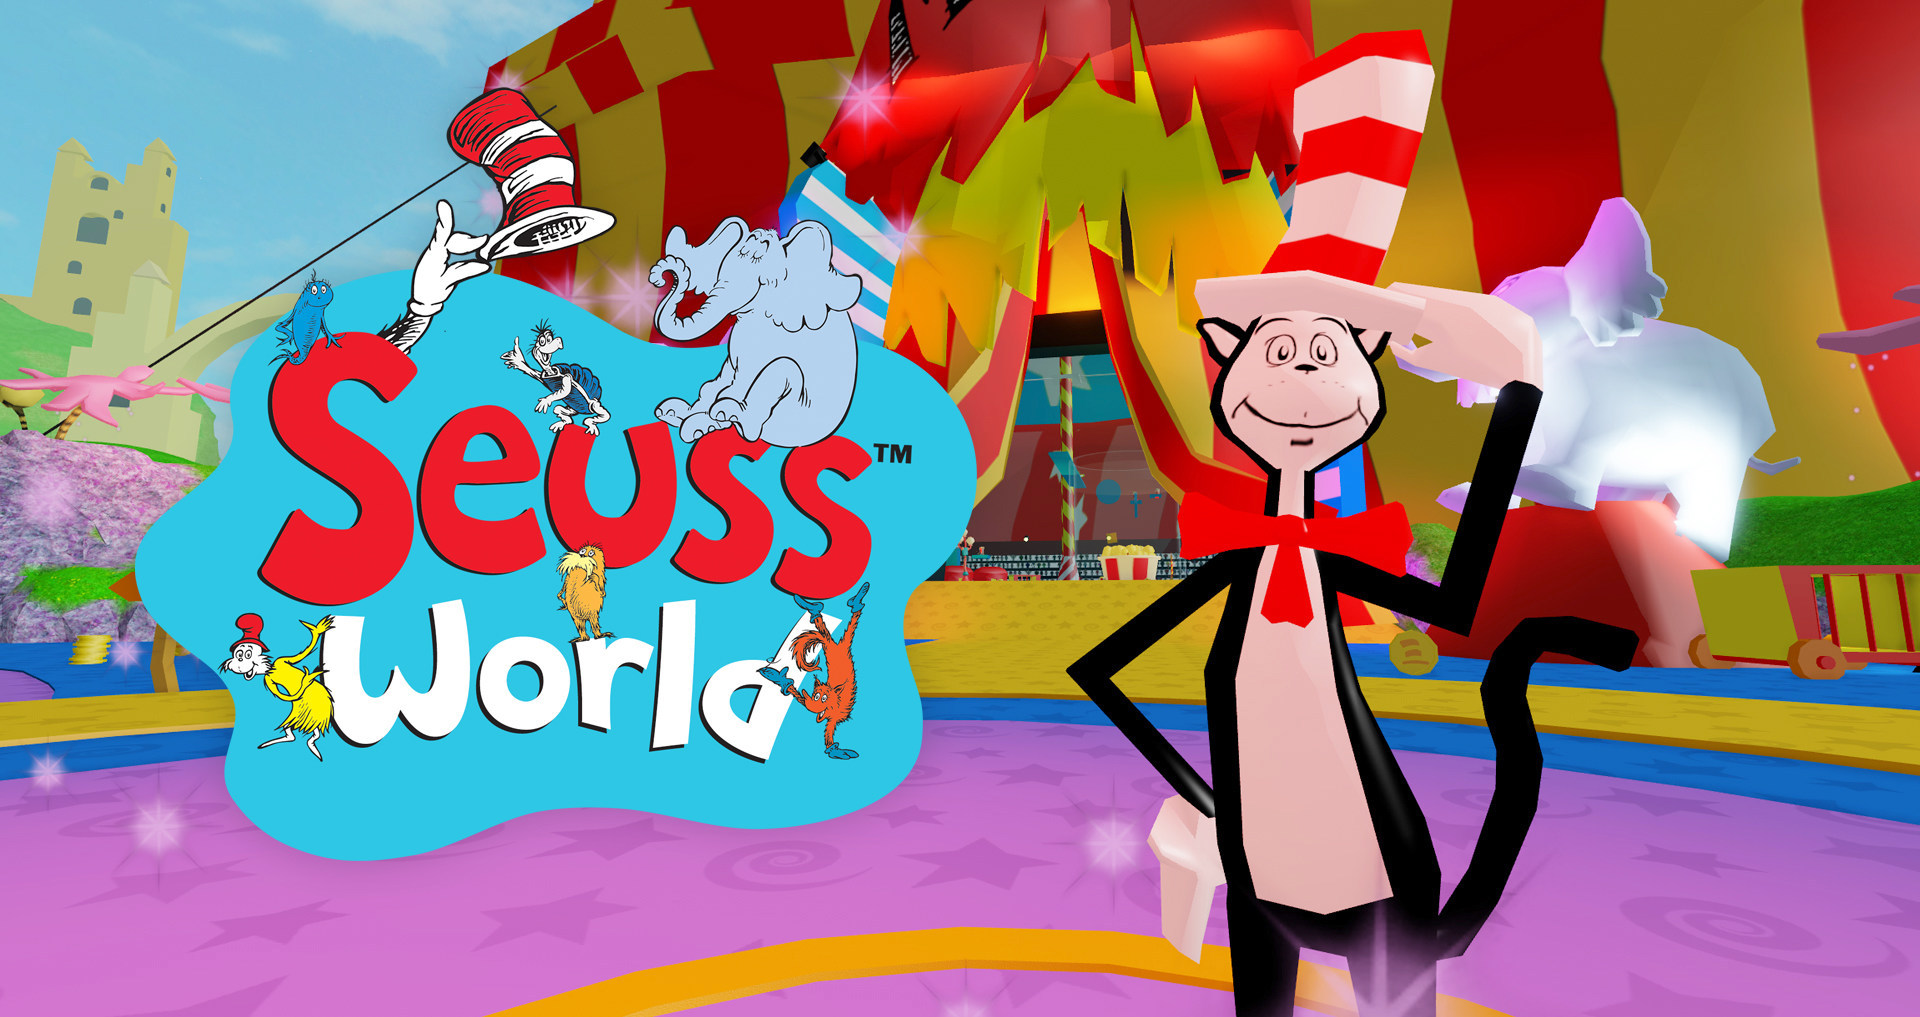 Seuss World game on Roblox.